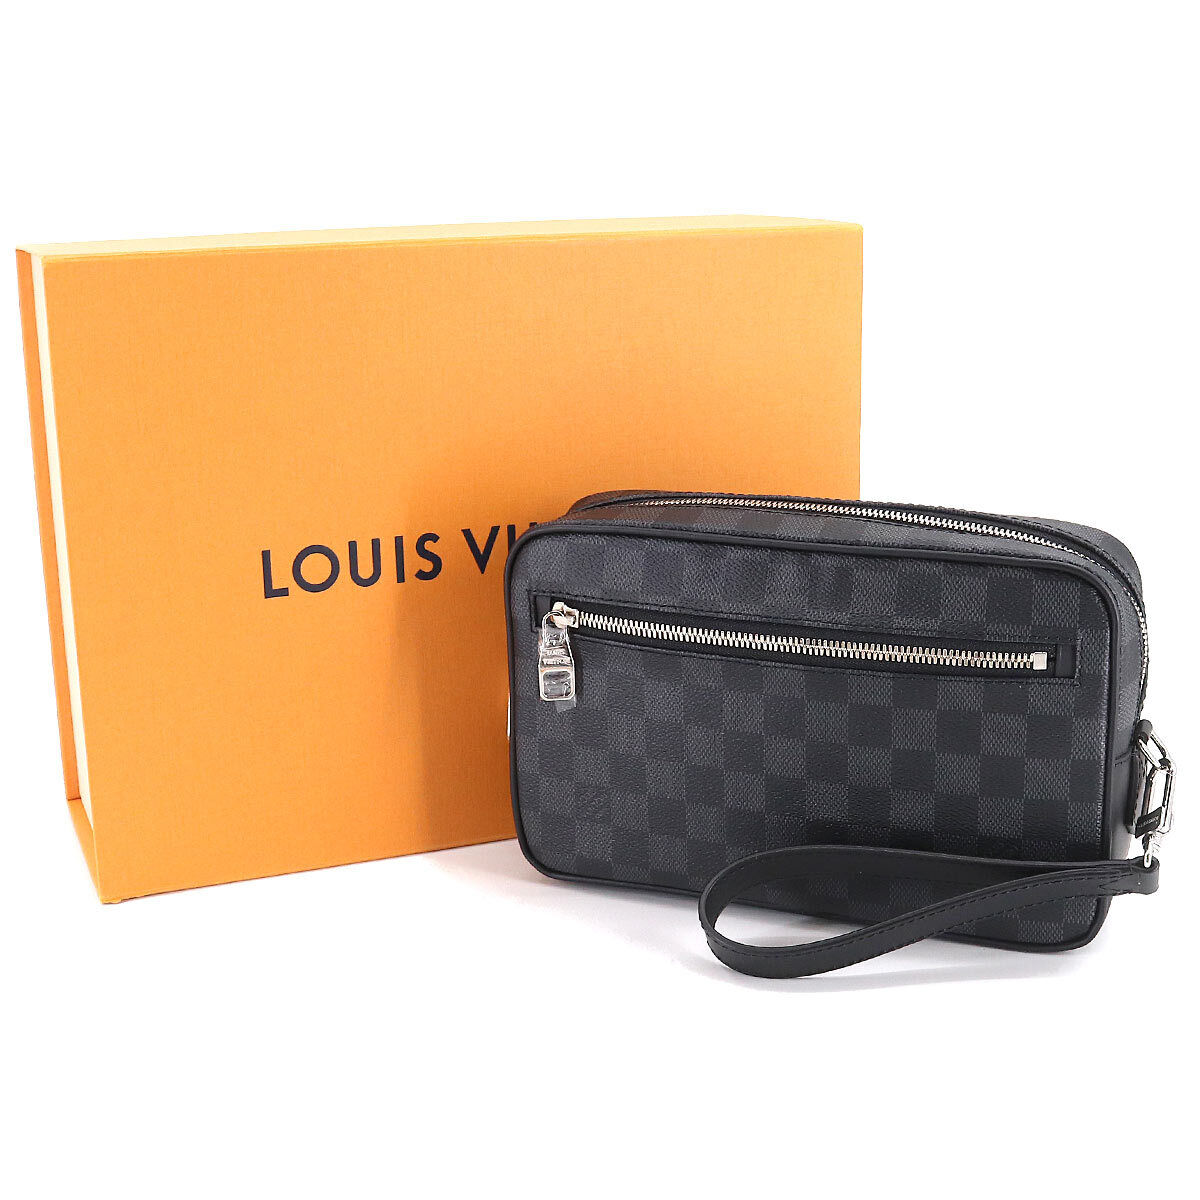 Shop Louis Vuitton Kasai Clutch (N41664) by MUTIARA